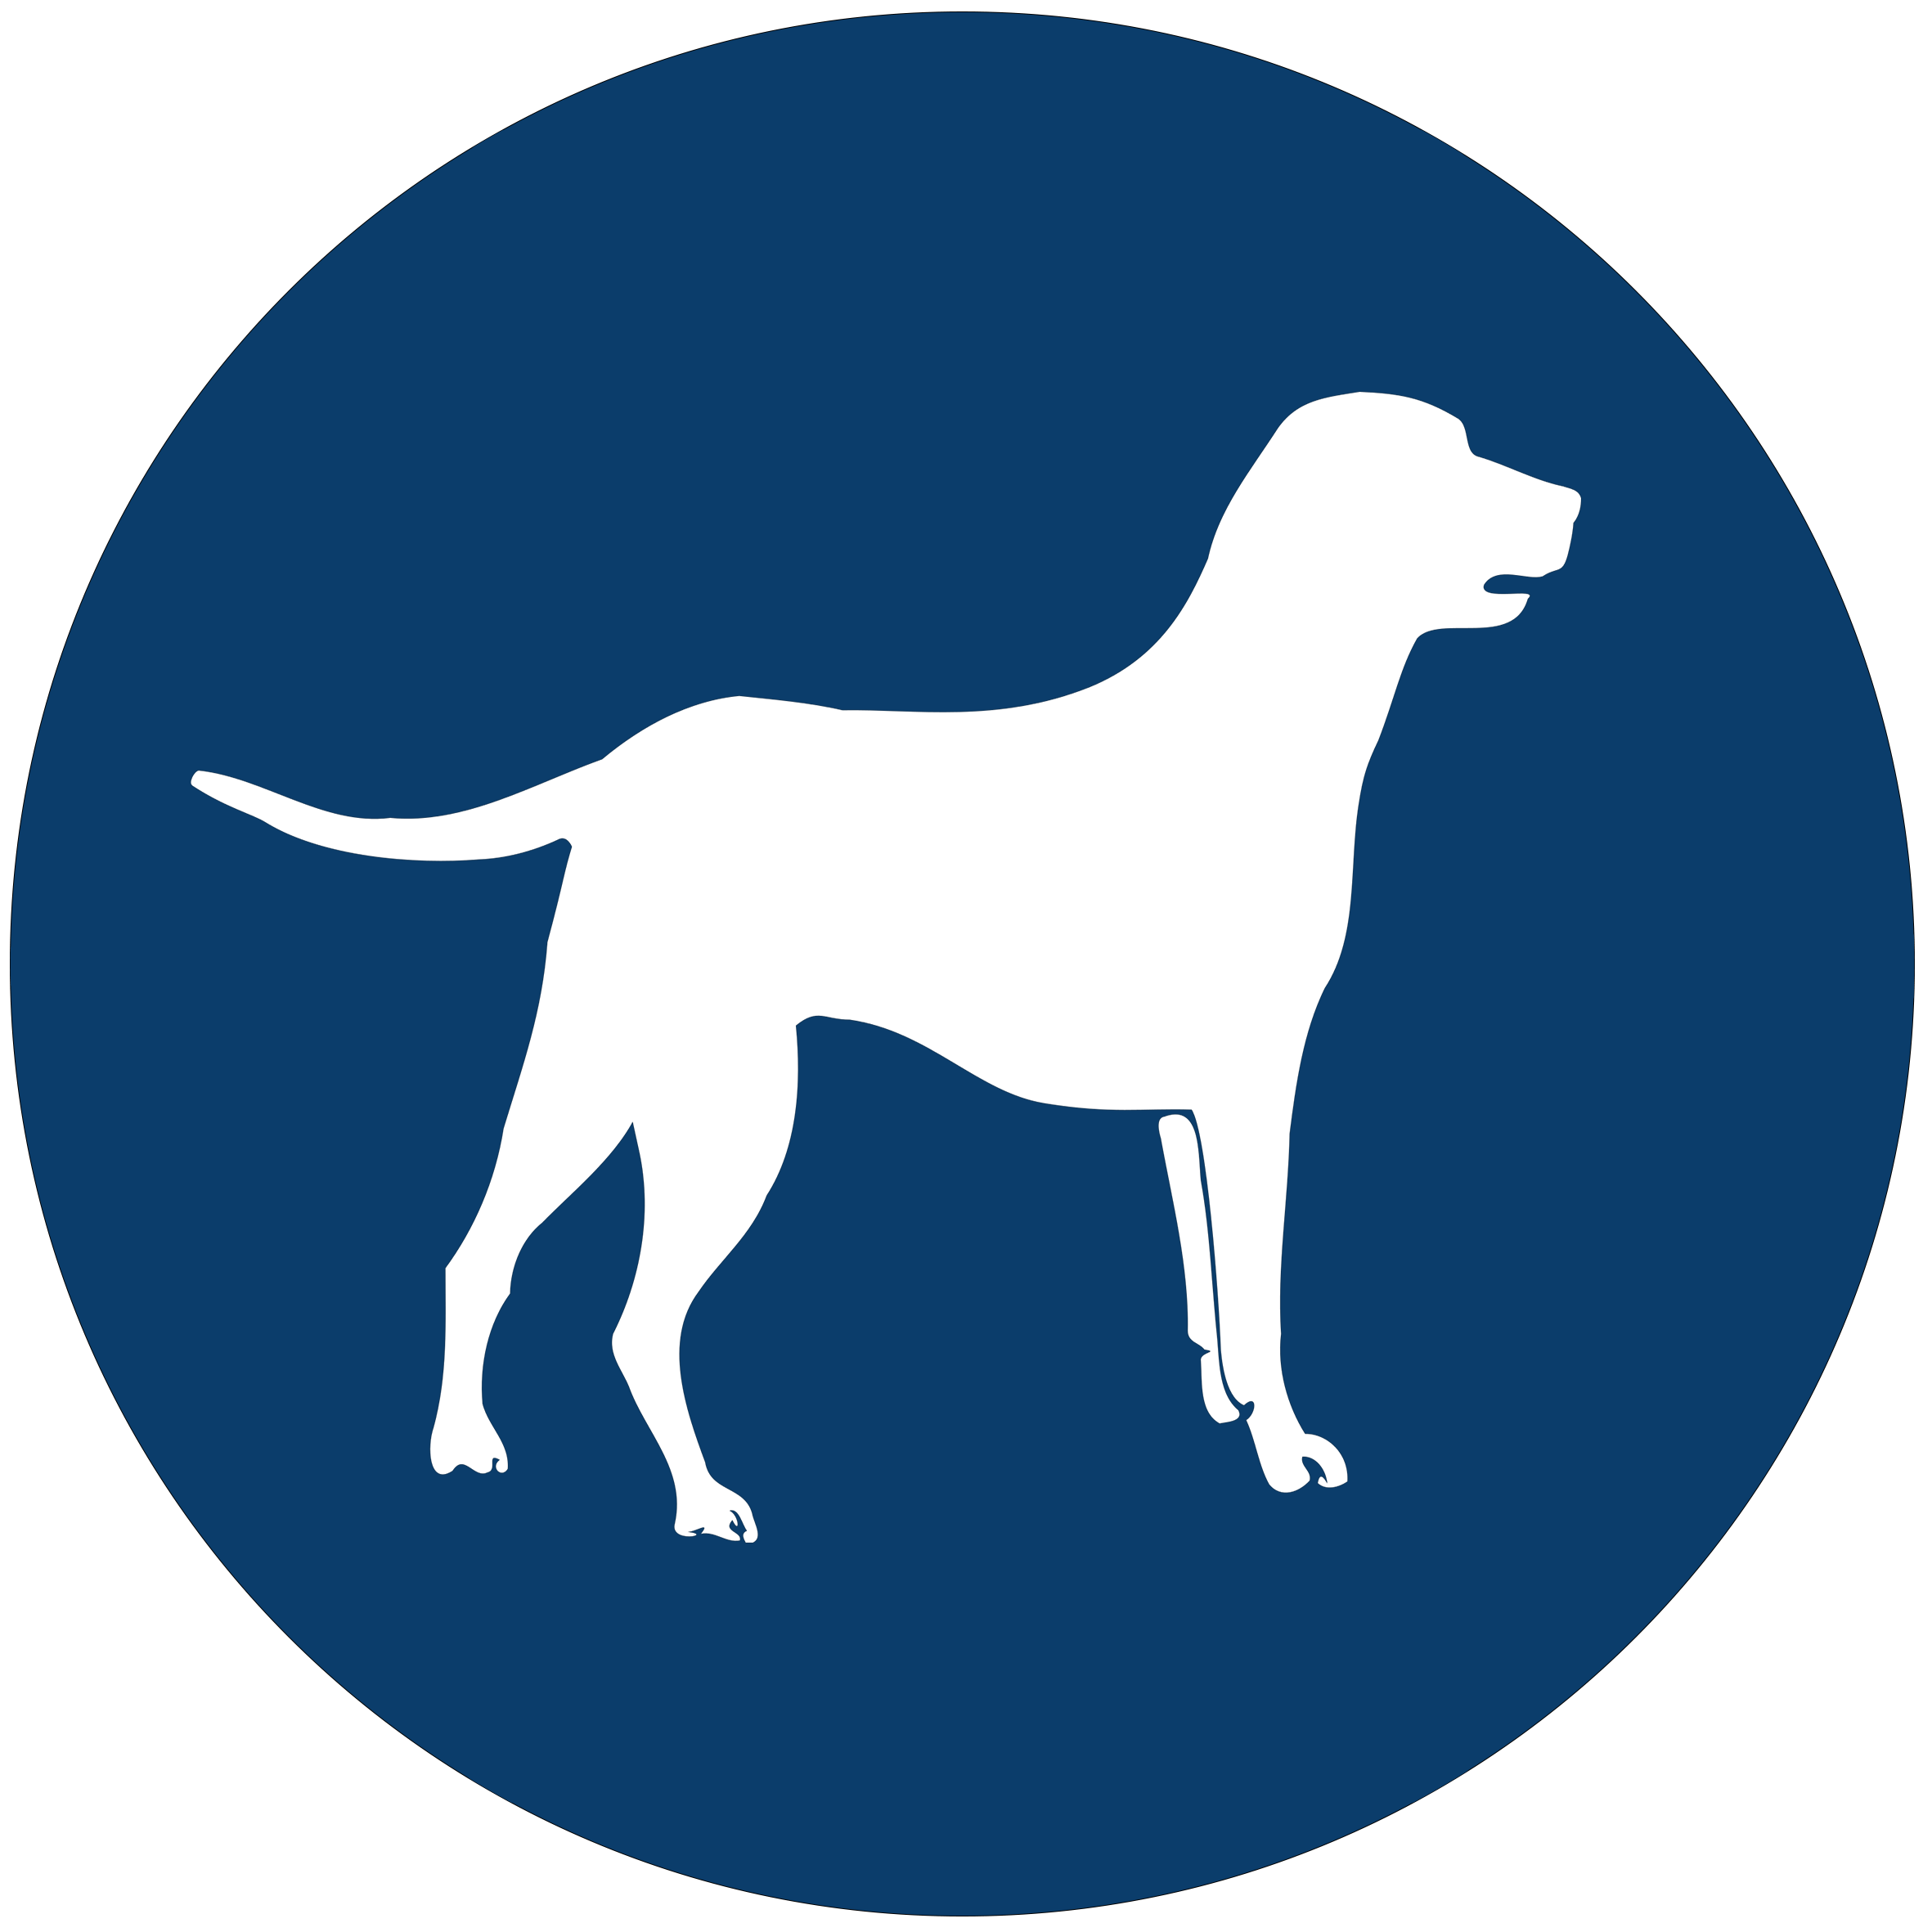 Dog-Vector-Icon